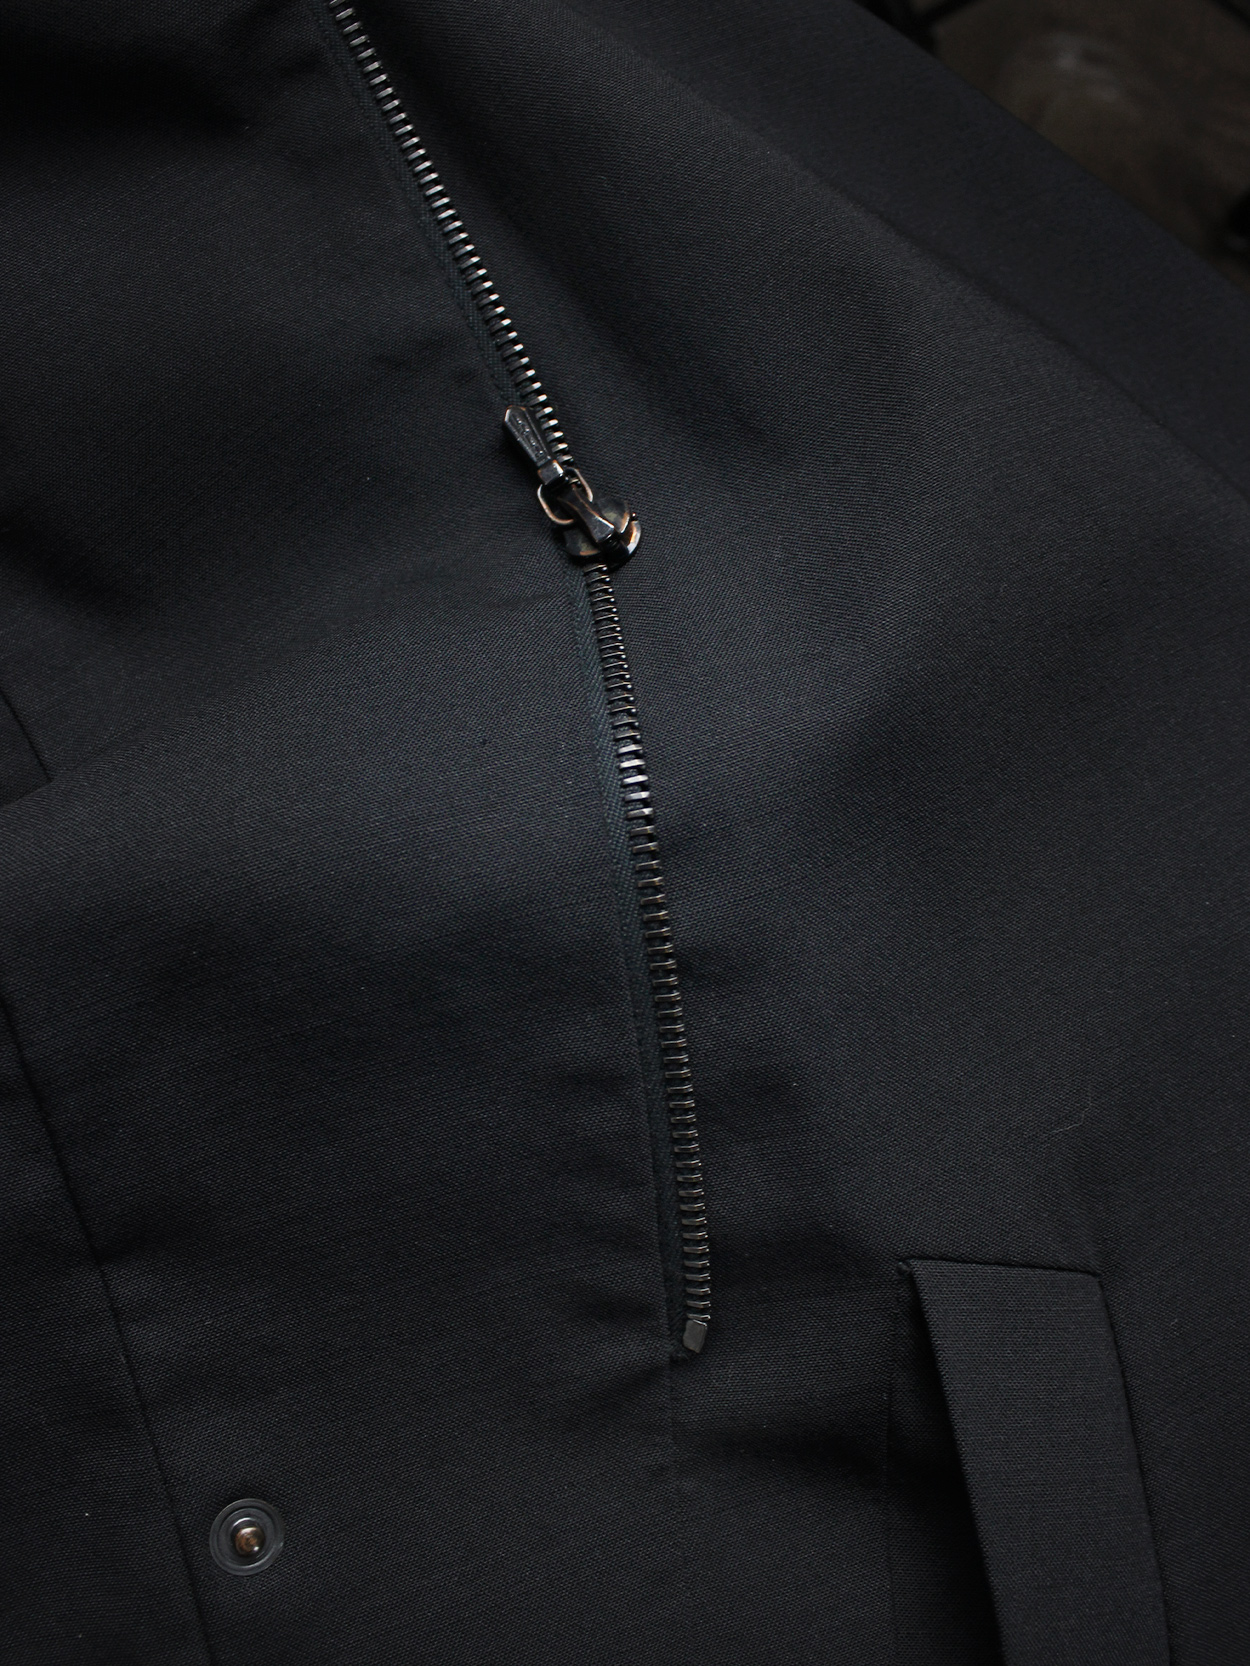 A.F. Vandevorst black asymmetric coat with draped volume - V A N II T A S